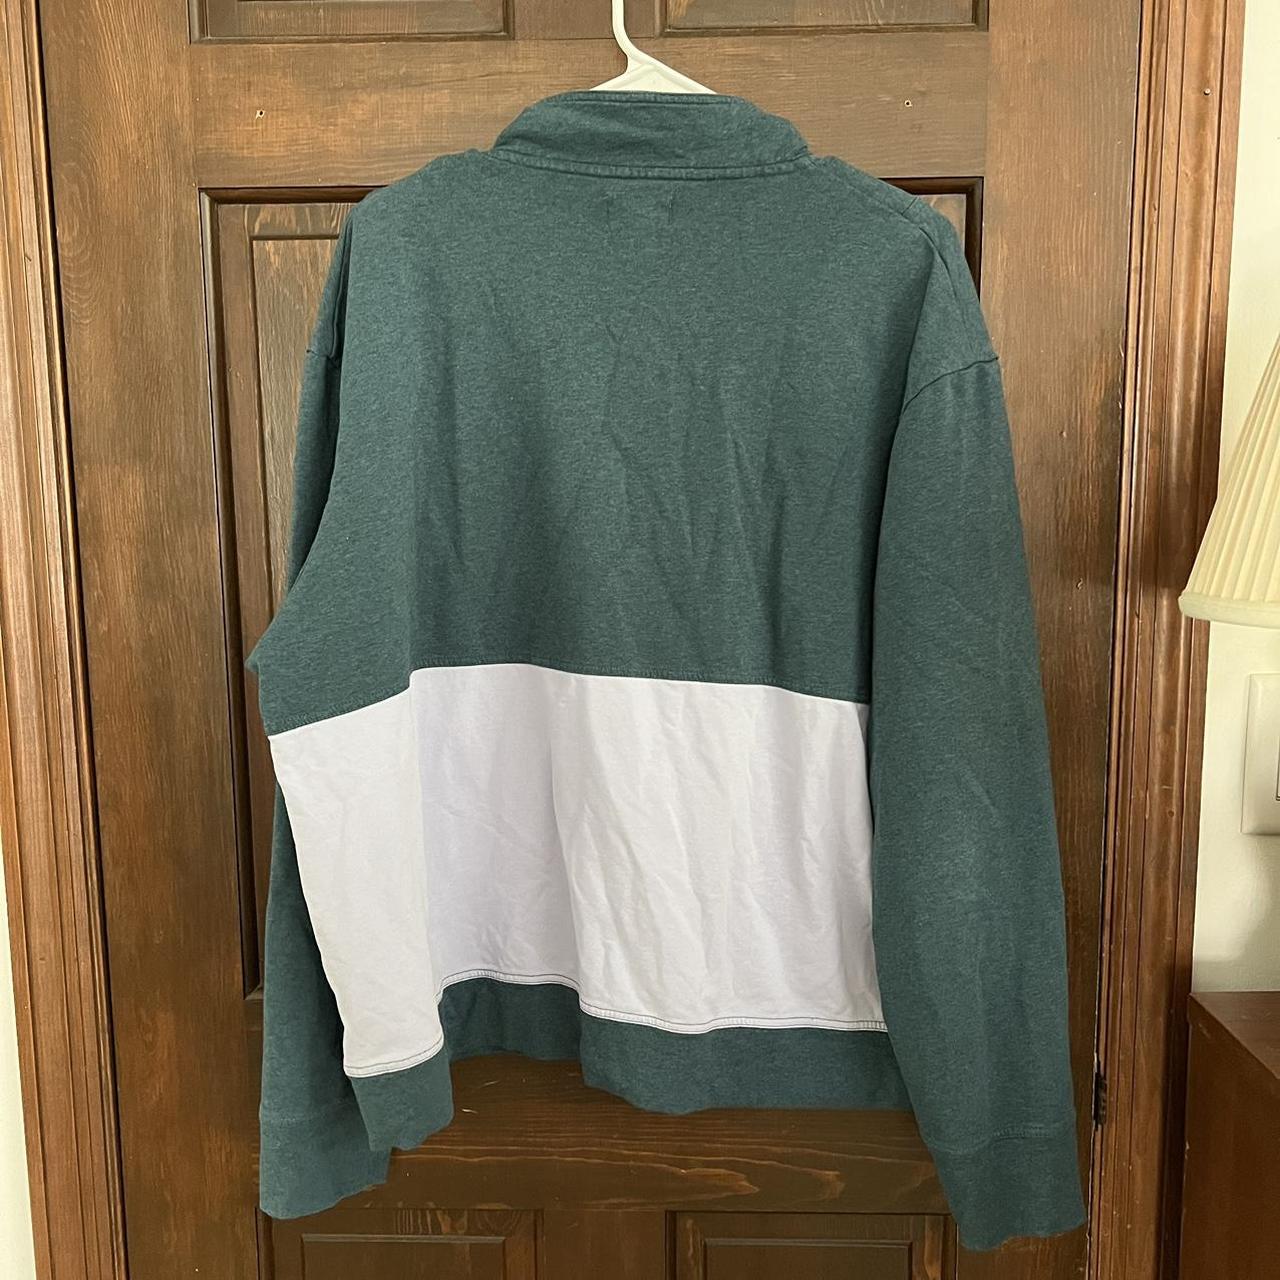 Pact activewear sweatshirt. (Pact uses organic - Depop